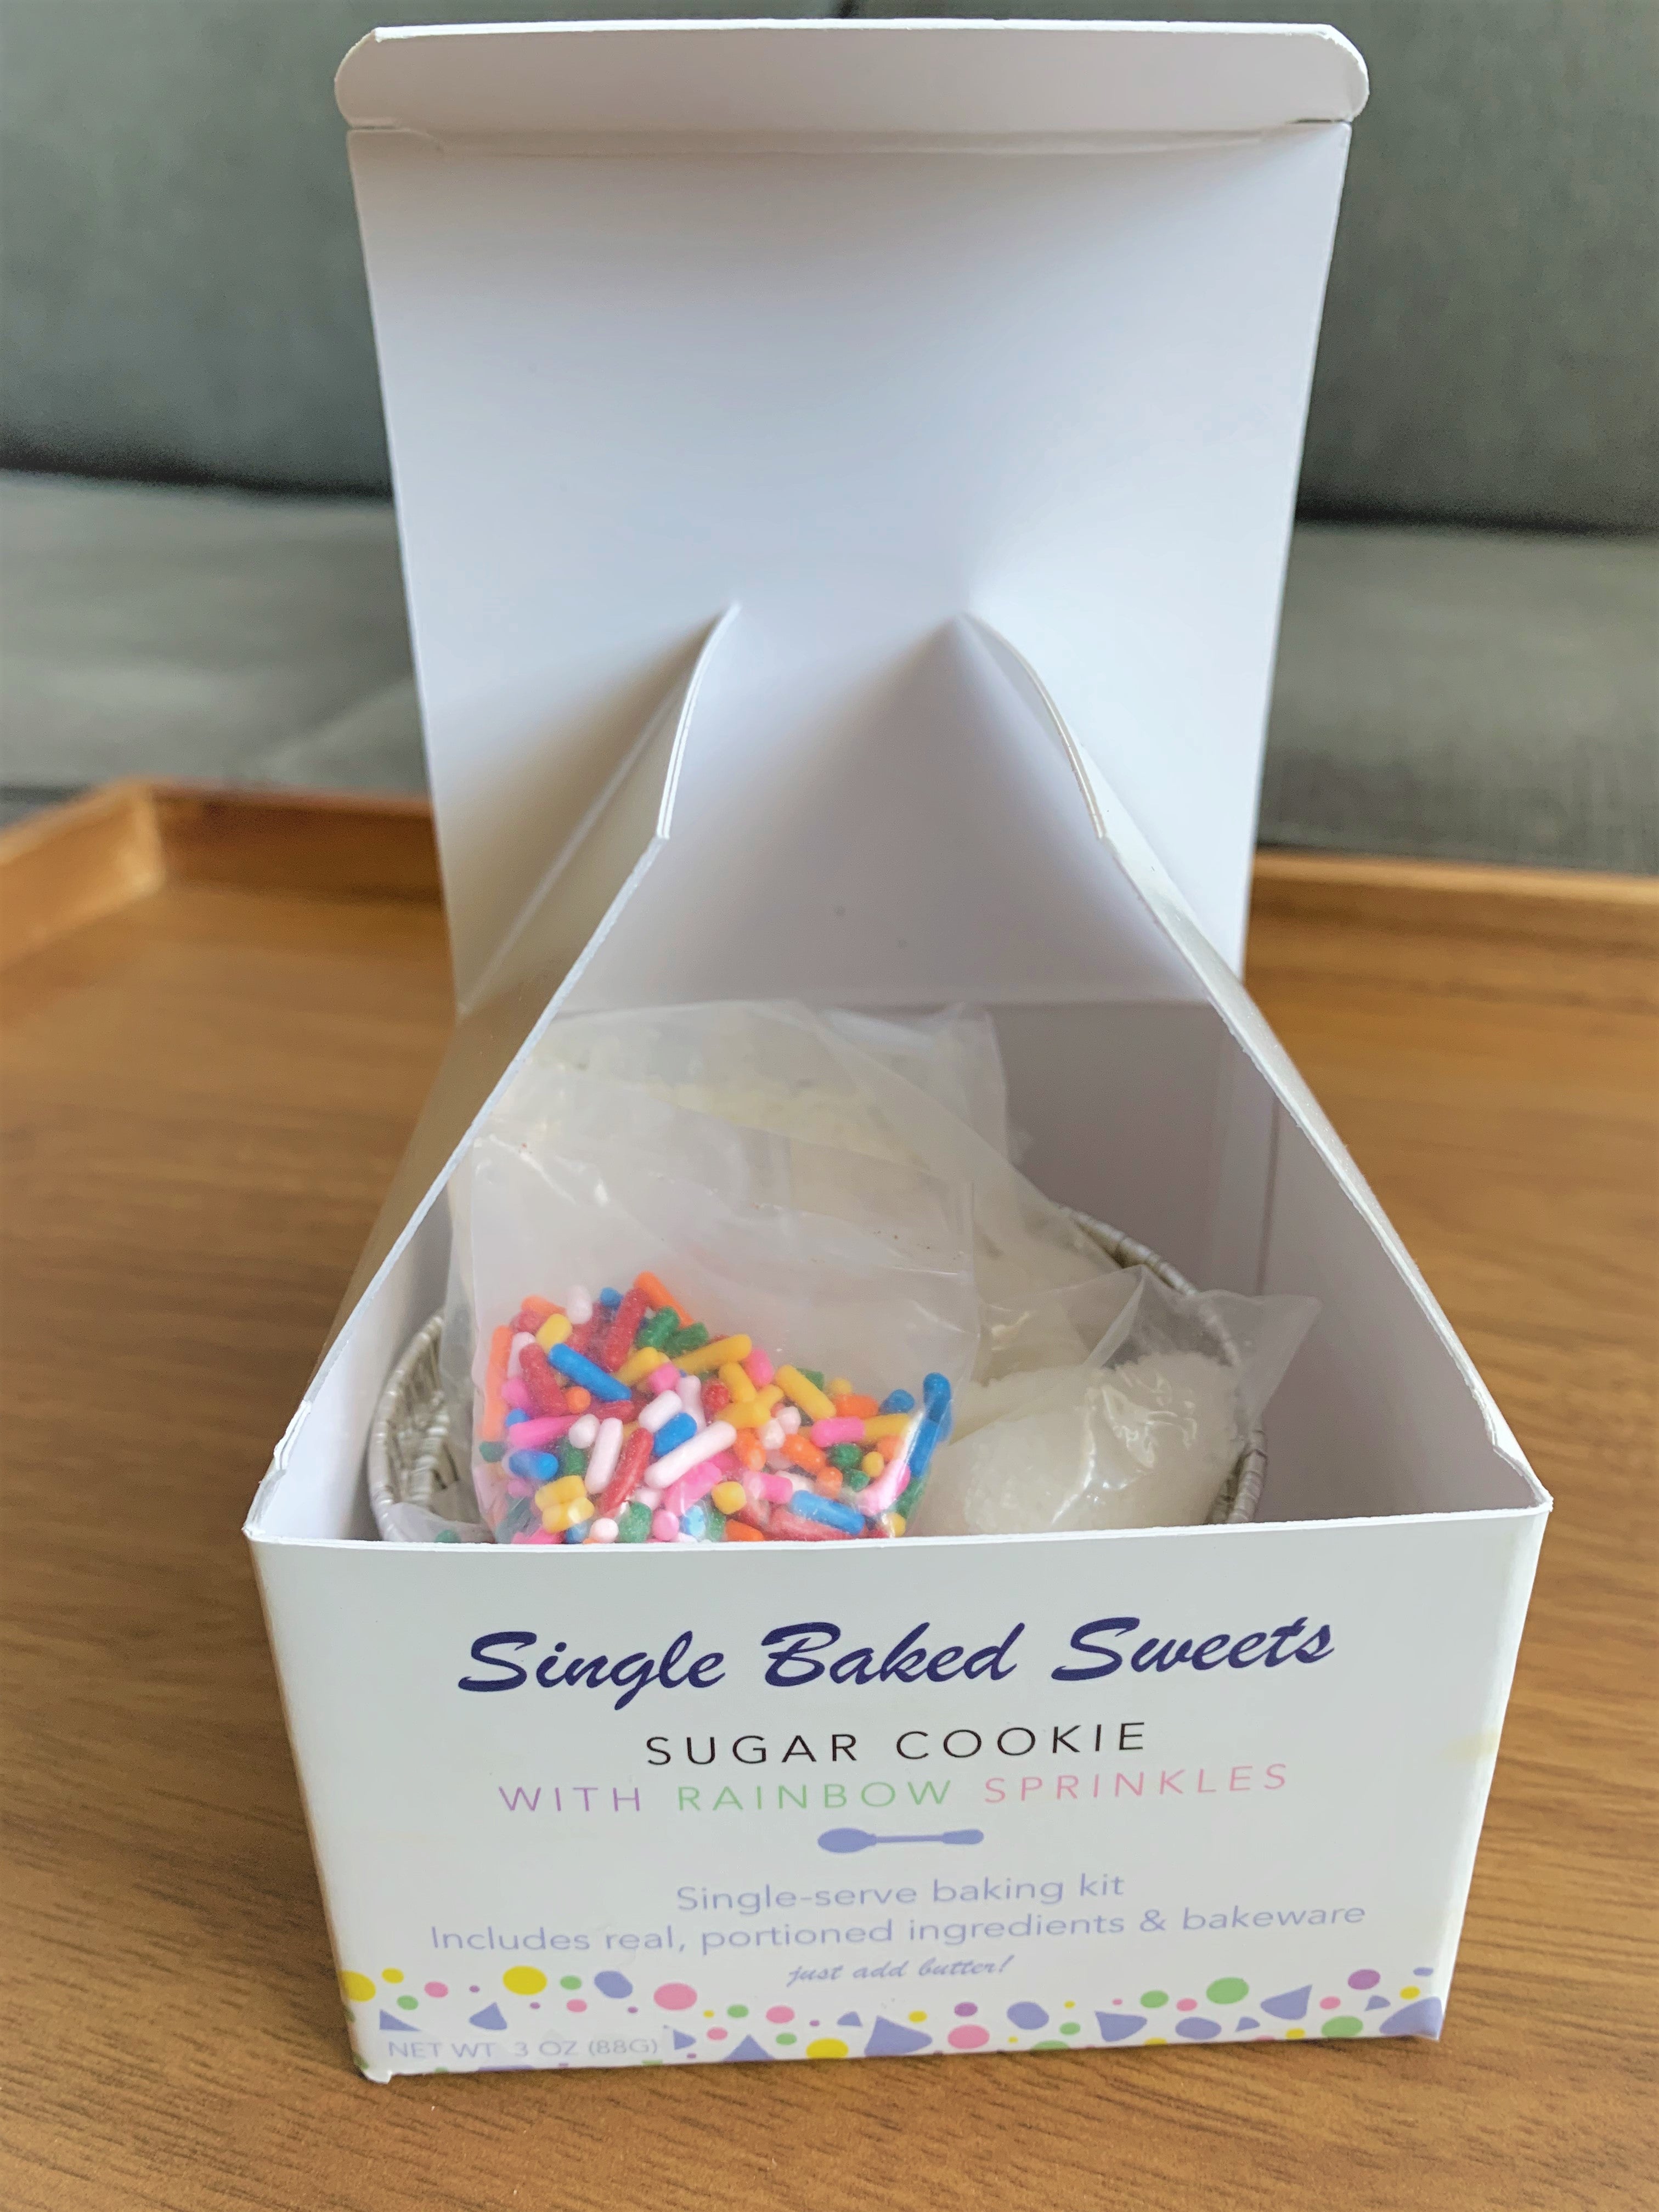 Sugar Cookie with Sprinkles - Single Baked Sweets